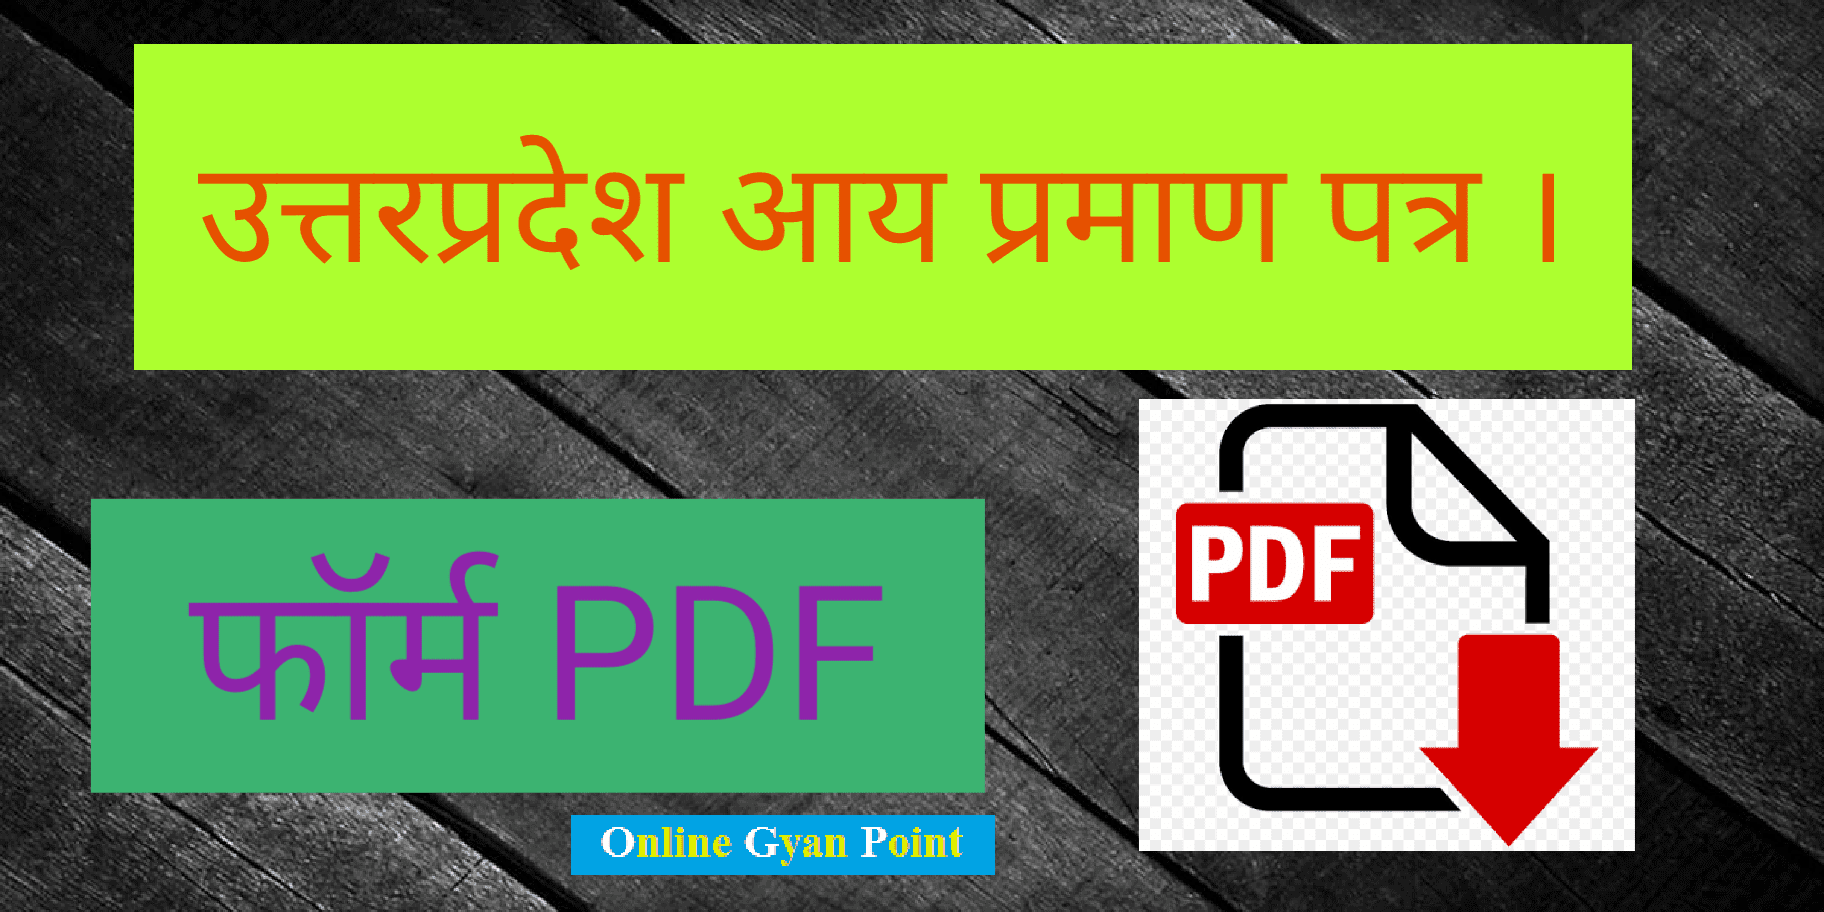 uttarakhand income certificate form pdf